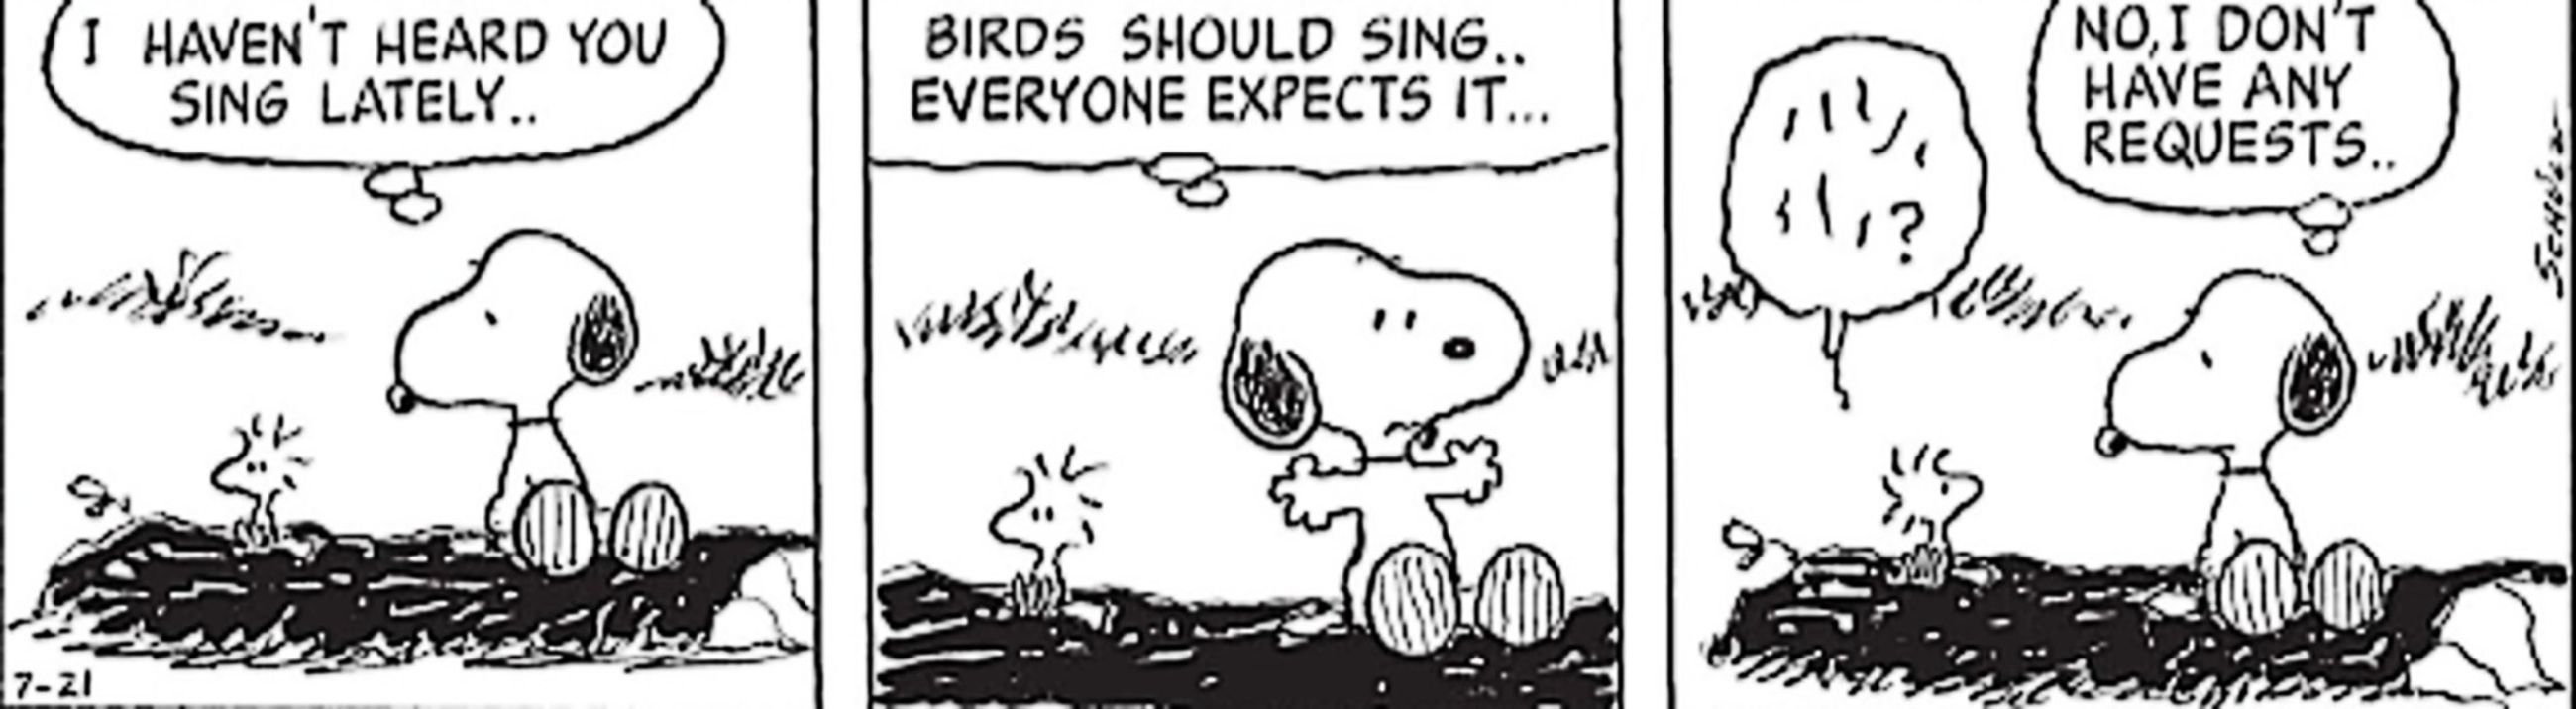 Peanuts, Snoopy tells Woodstock he should sing more